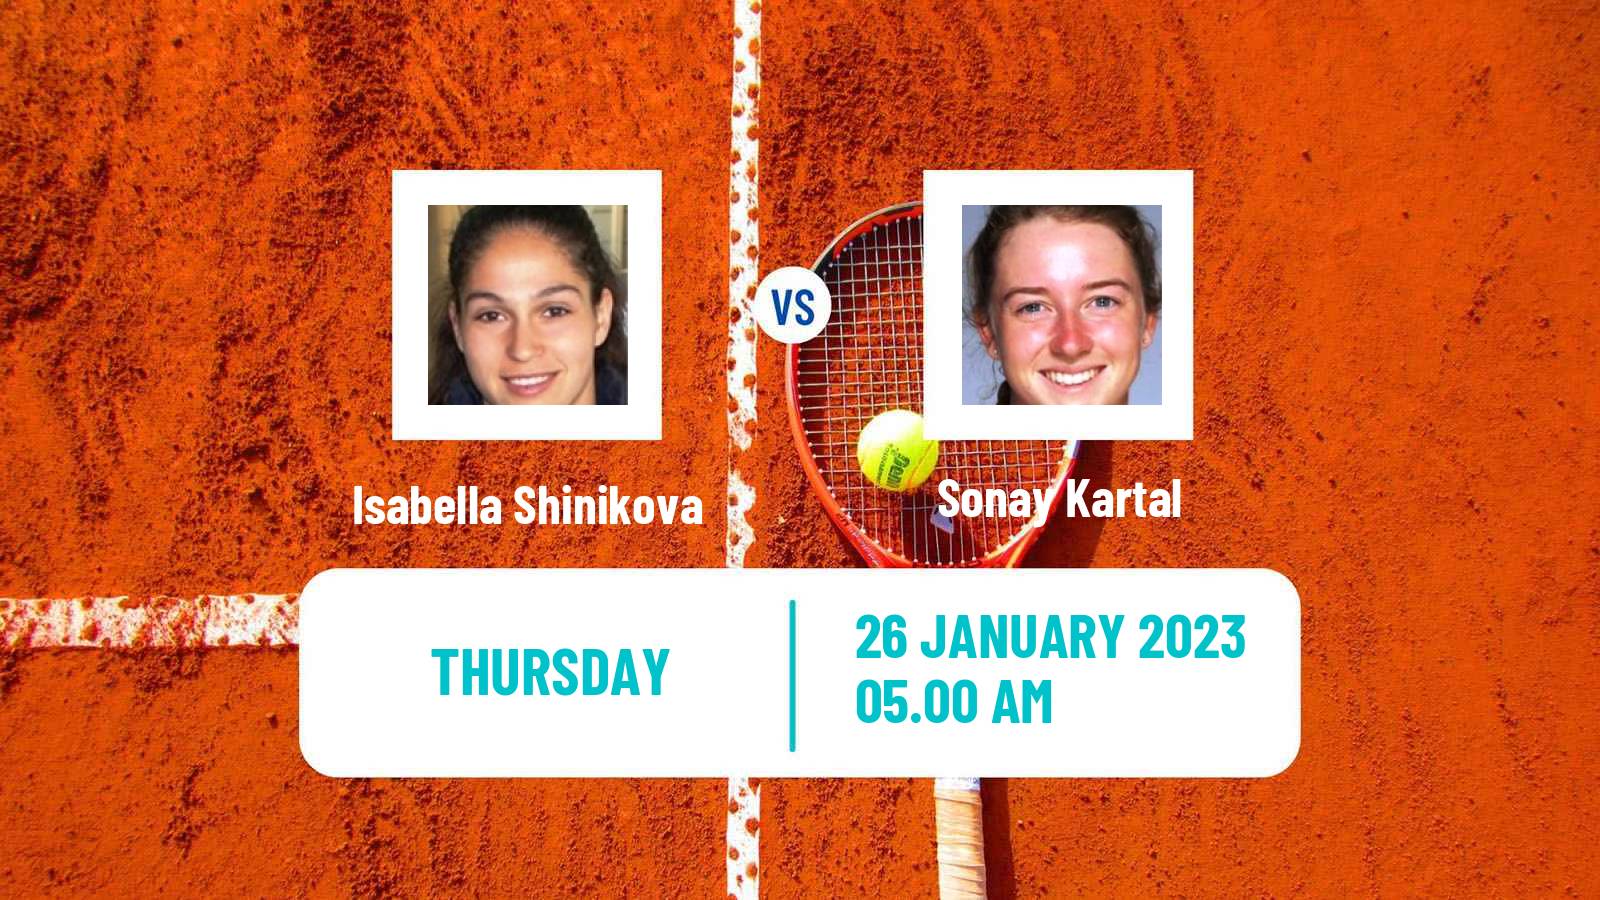 Tennis ITF Tournaments Isabella Shinikova - Sonay Kartal